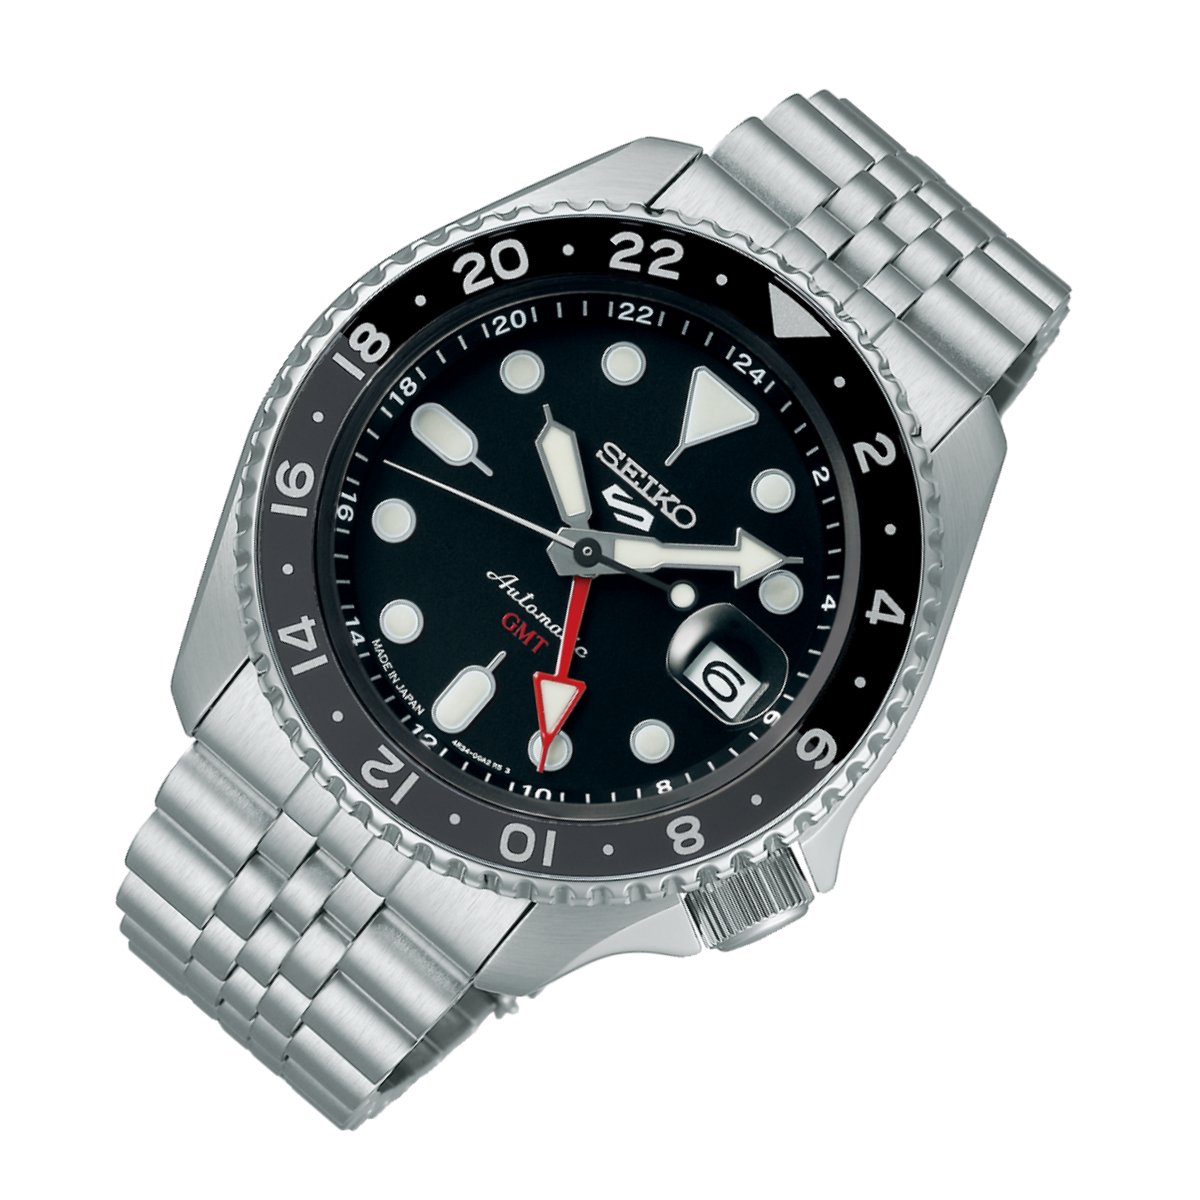 Seiko 5 Sports JDM SBSC001 GMT Automatic Watch (PRE-ORDER) -Seiko